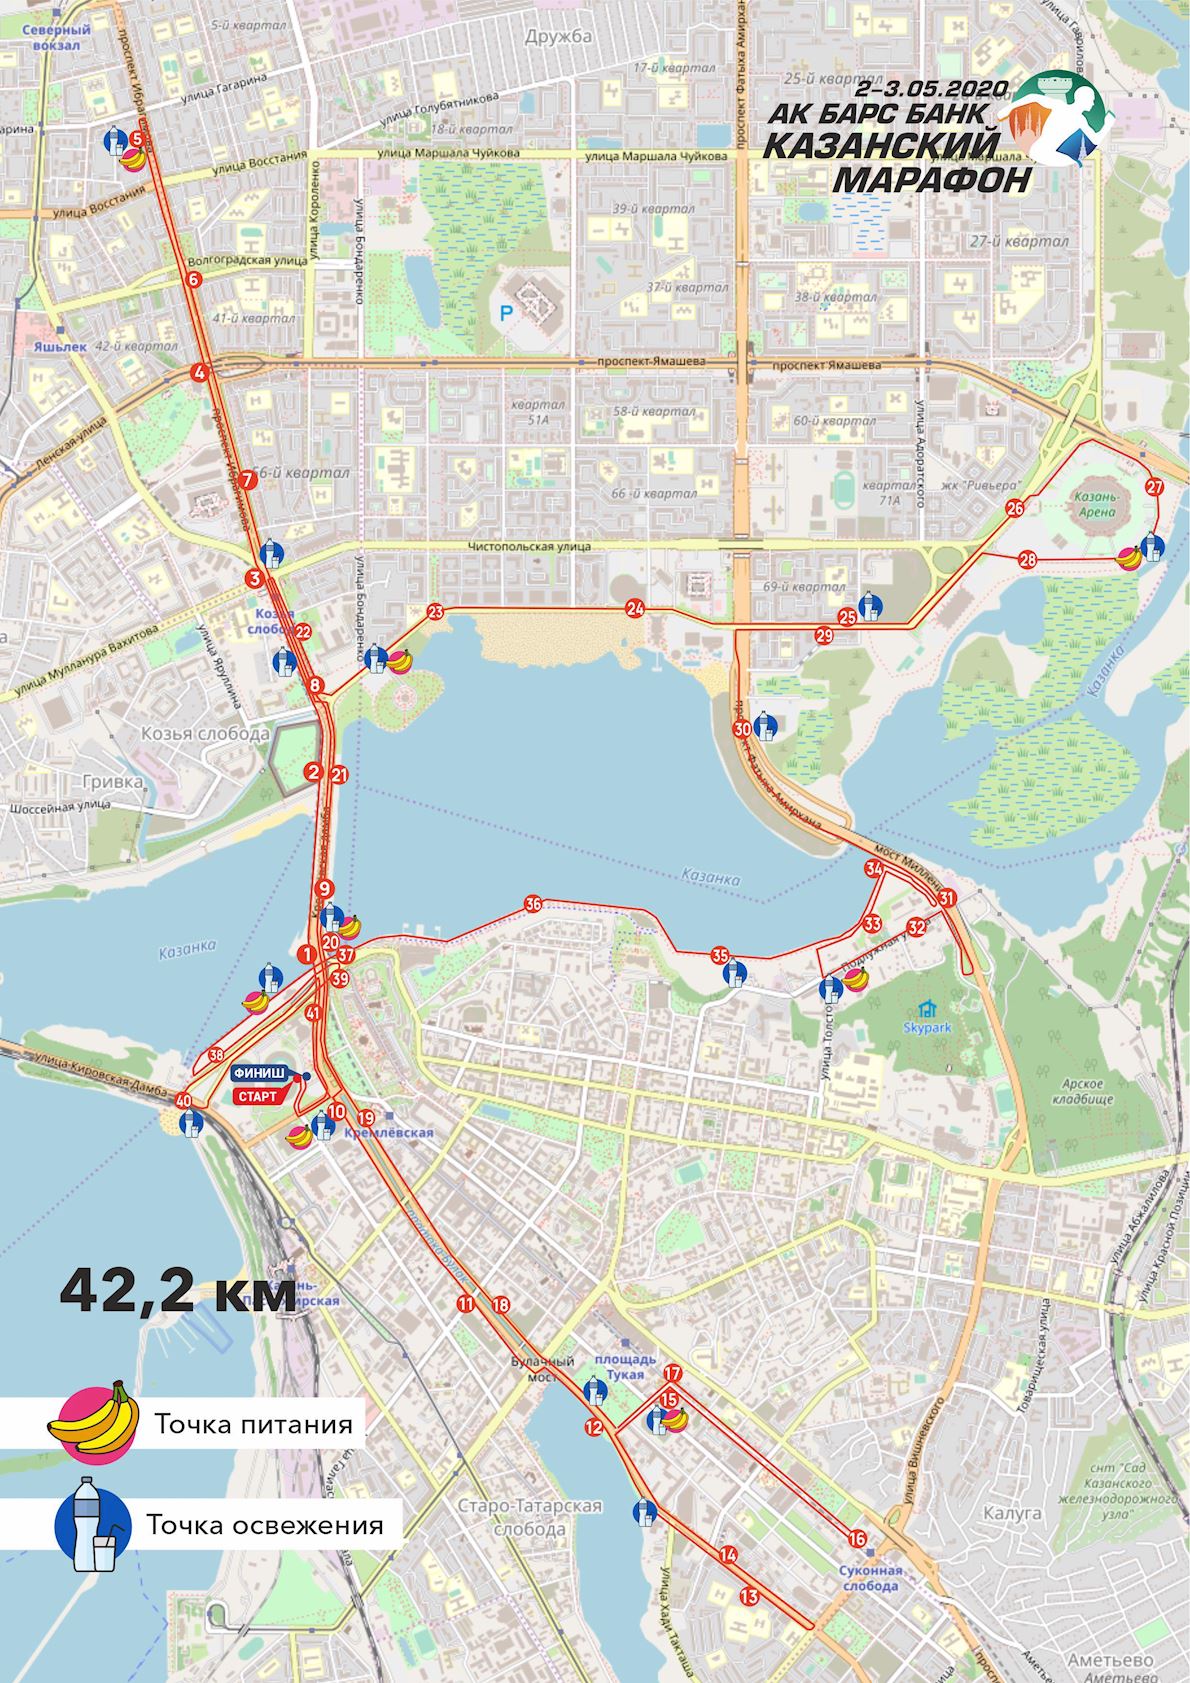 Kazan Marathon Mappa del percorso